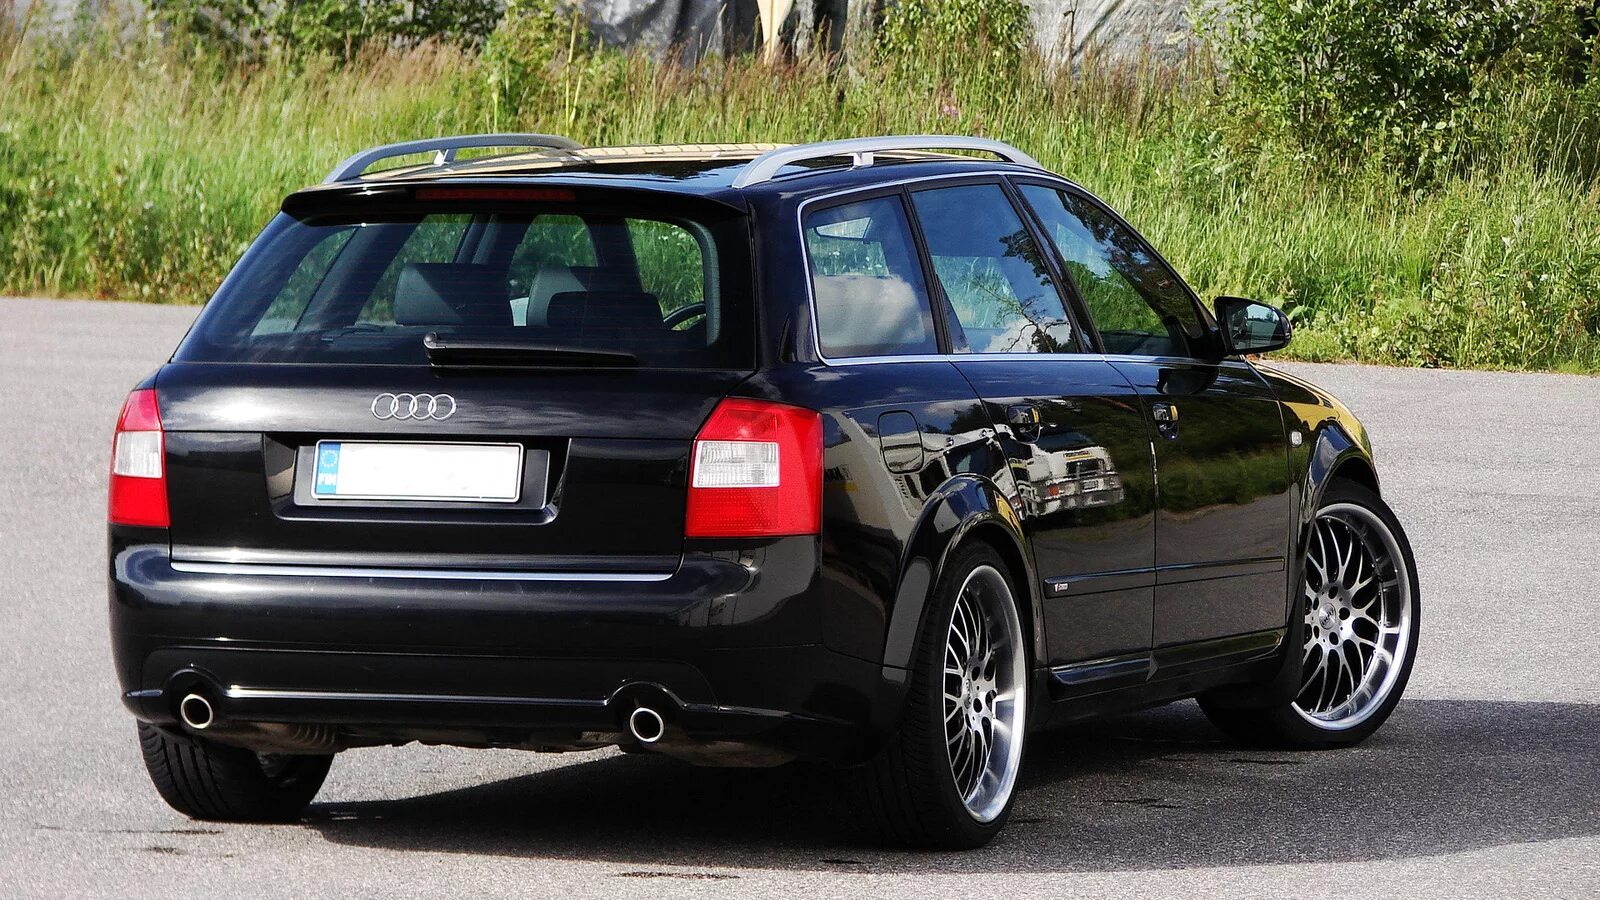 B6 b4 b9. Ауди а4 Авант 2005. Ауди а4 b6 avant. Audi a4 2005. Audi a4 b6 avant s-line.